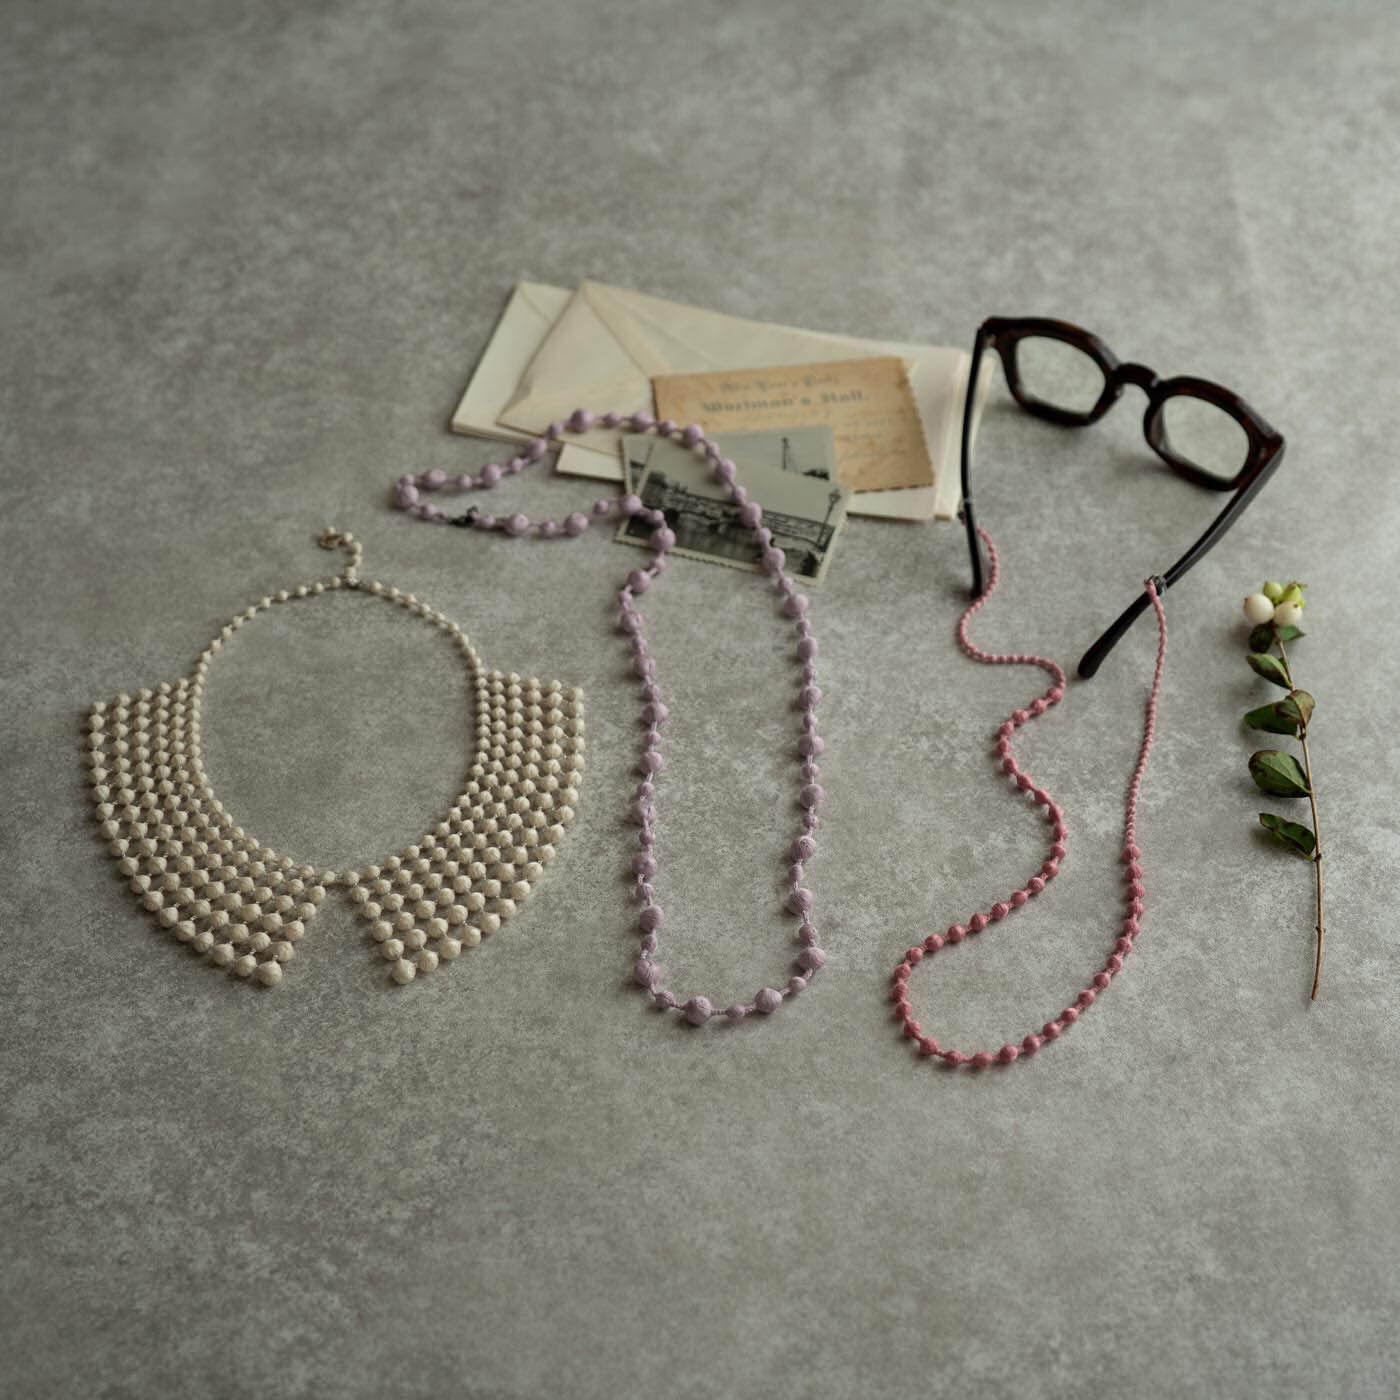 ＆Stories|群馬の刺繍工房が作った 糸の宝石のシルクロングネックレス〈ラベンダー〉|日本職人プロジェクトでは初登場の〈000 /トリプル・オゥ〉の美しい糸の宝石たち。あなたをいっそう輝かせる逸品を是非見つけてみて。